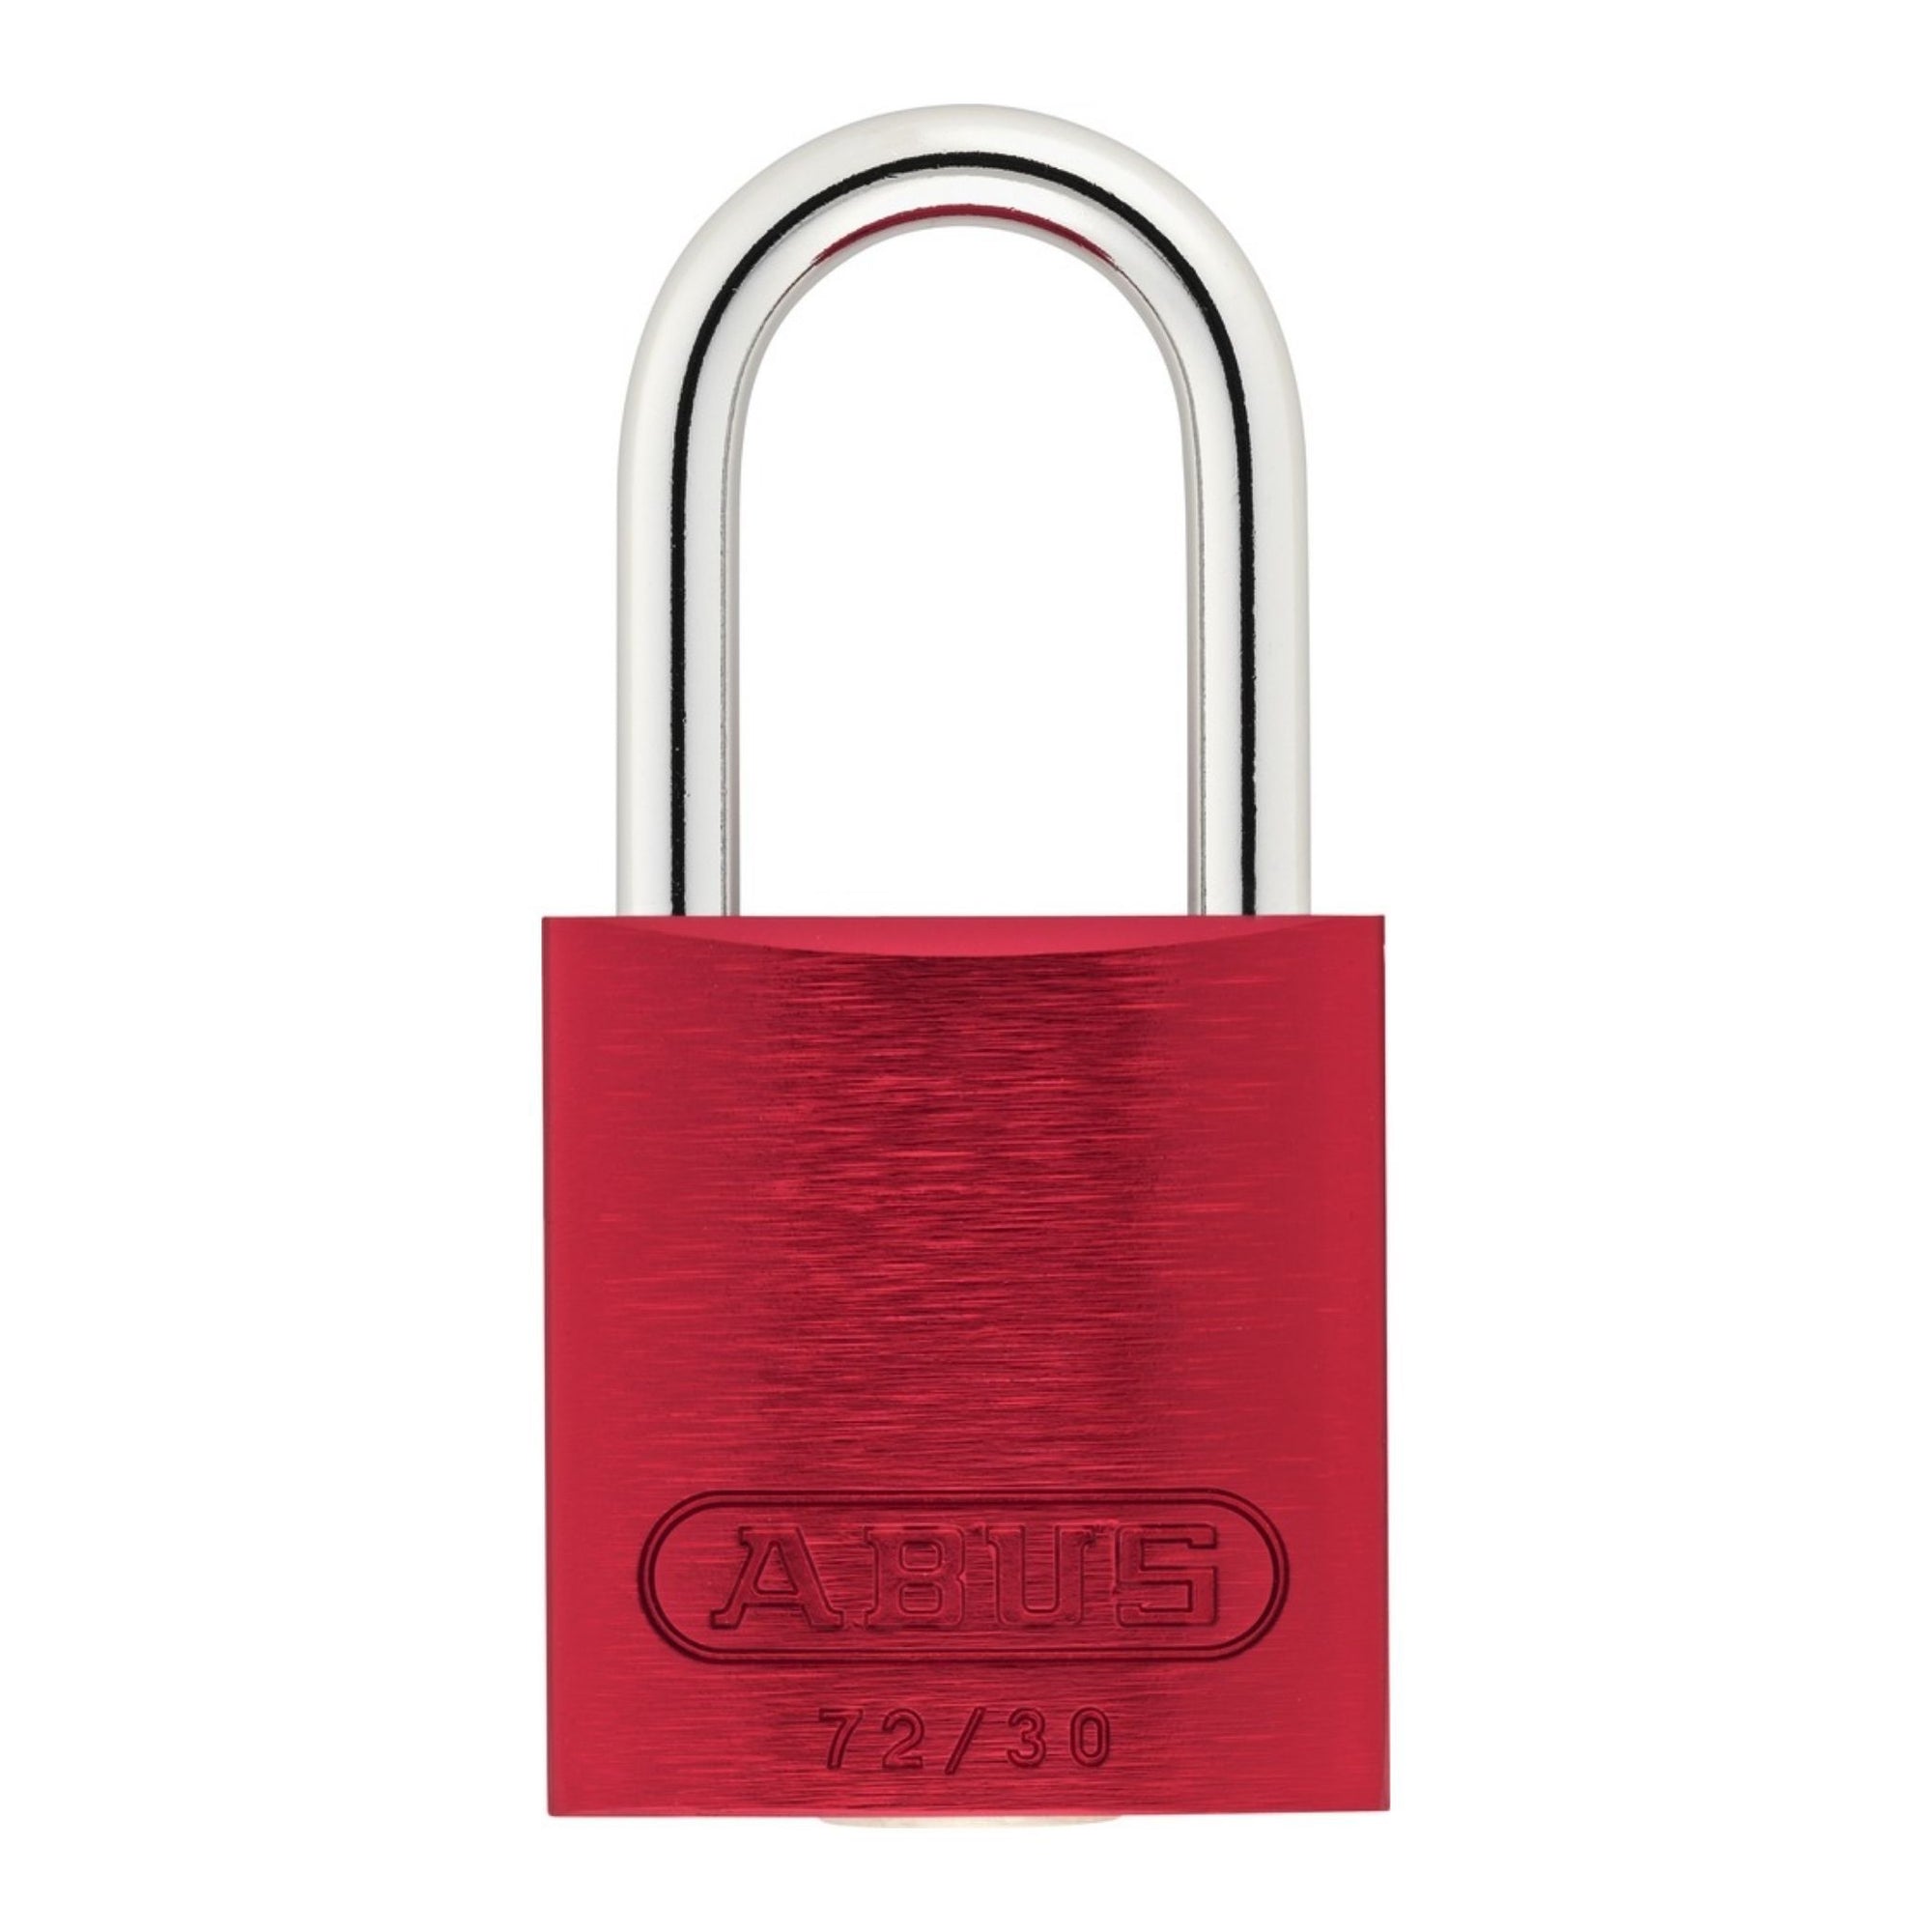 Abus 72/30 KA TT00036 Red Aluminum Safety Padlock Keyed Alike Lockout Tagout Locks - The Lock Source